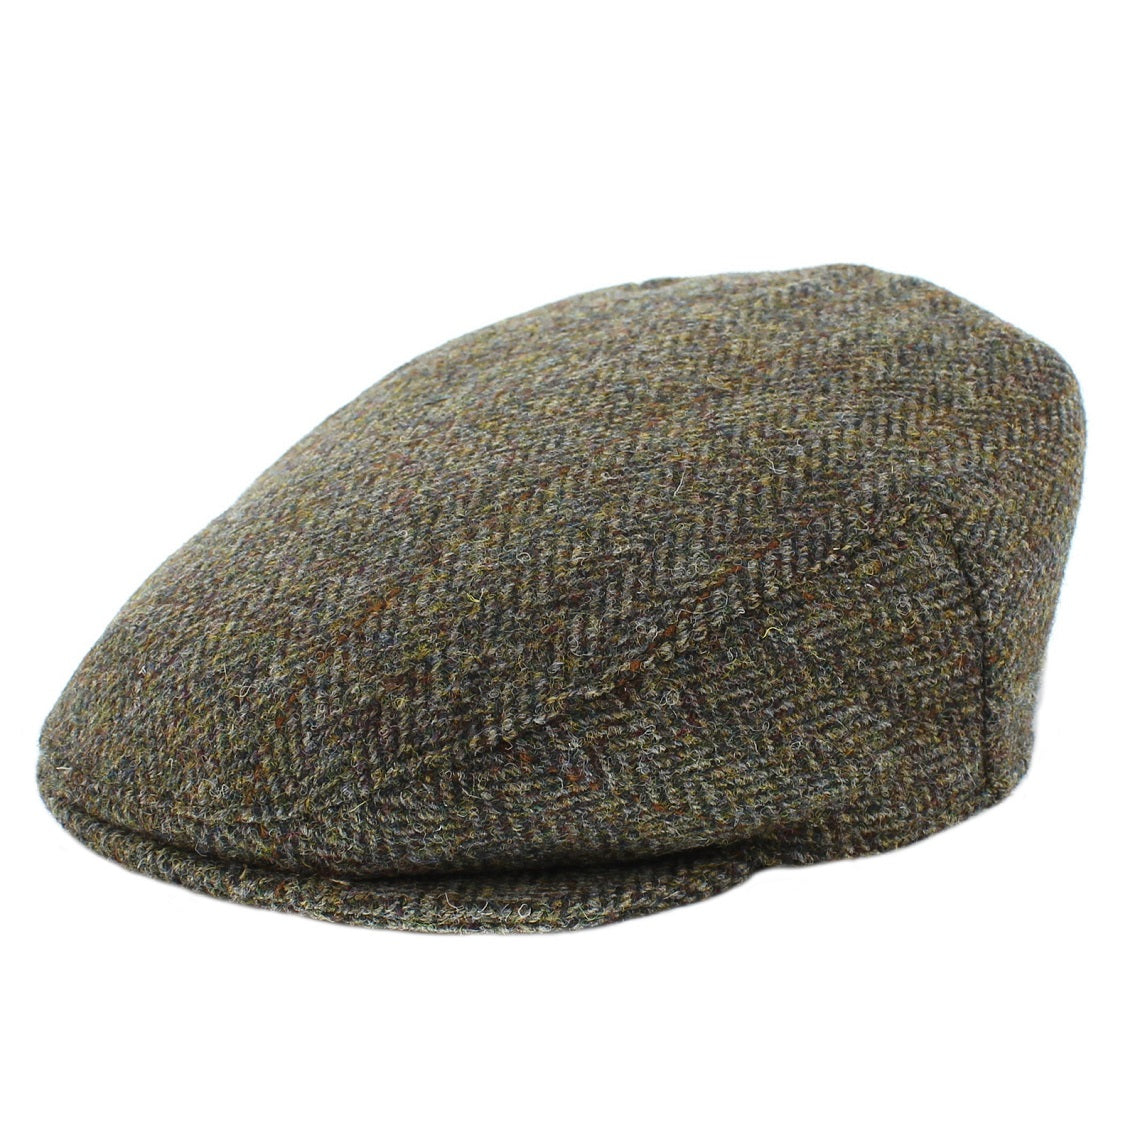 Failsworth Stornoway Harris Tweed Flat Cap Colour 2013 – The Hat Company